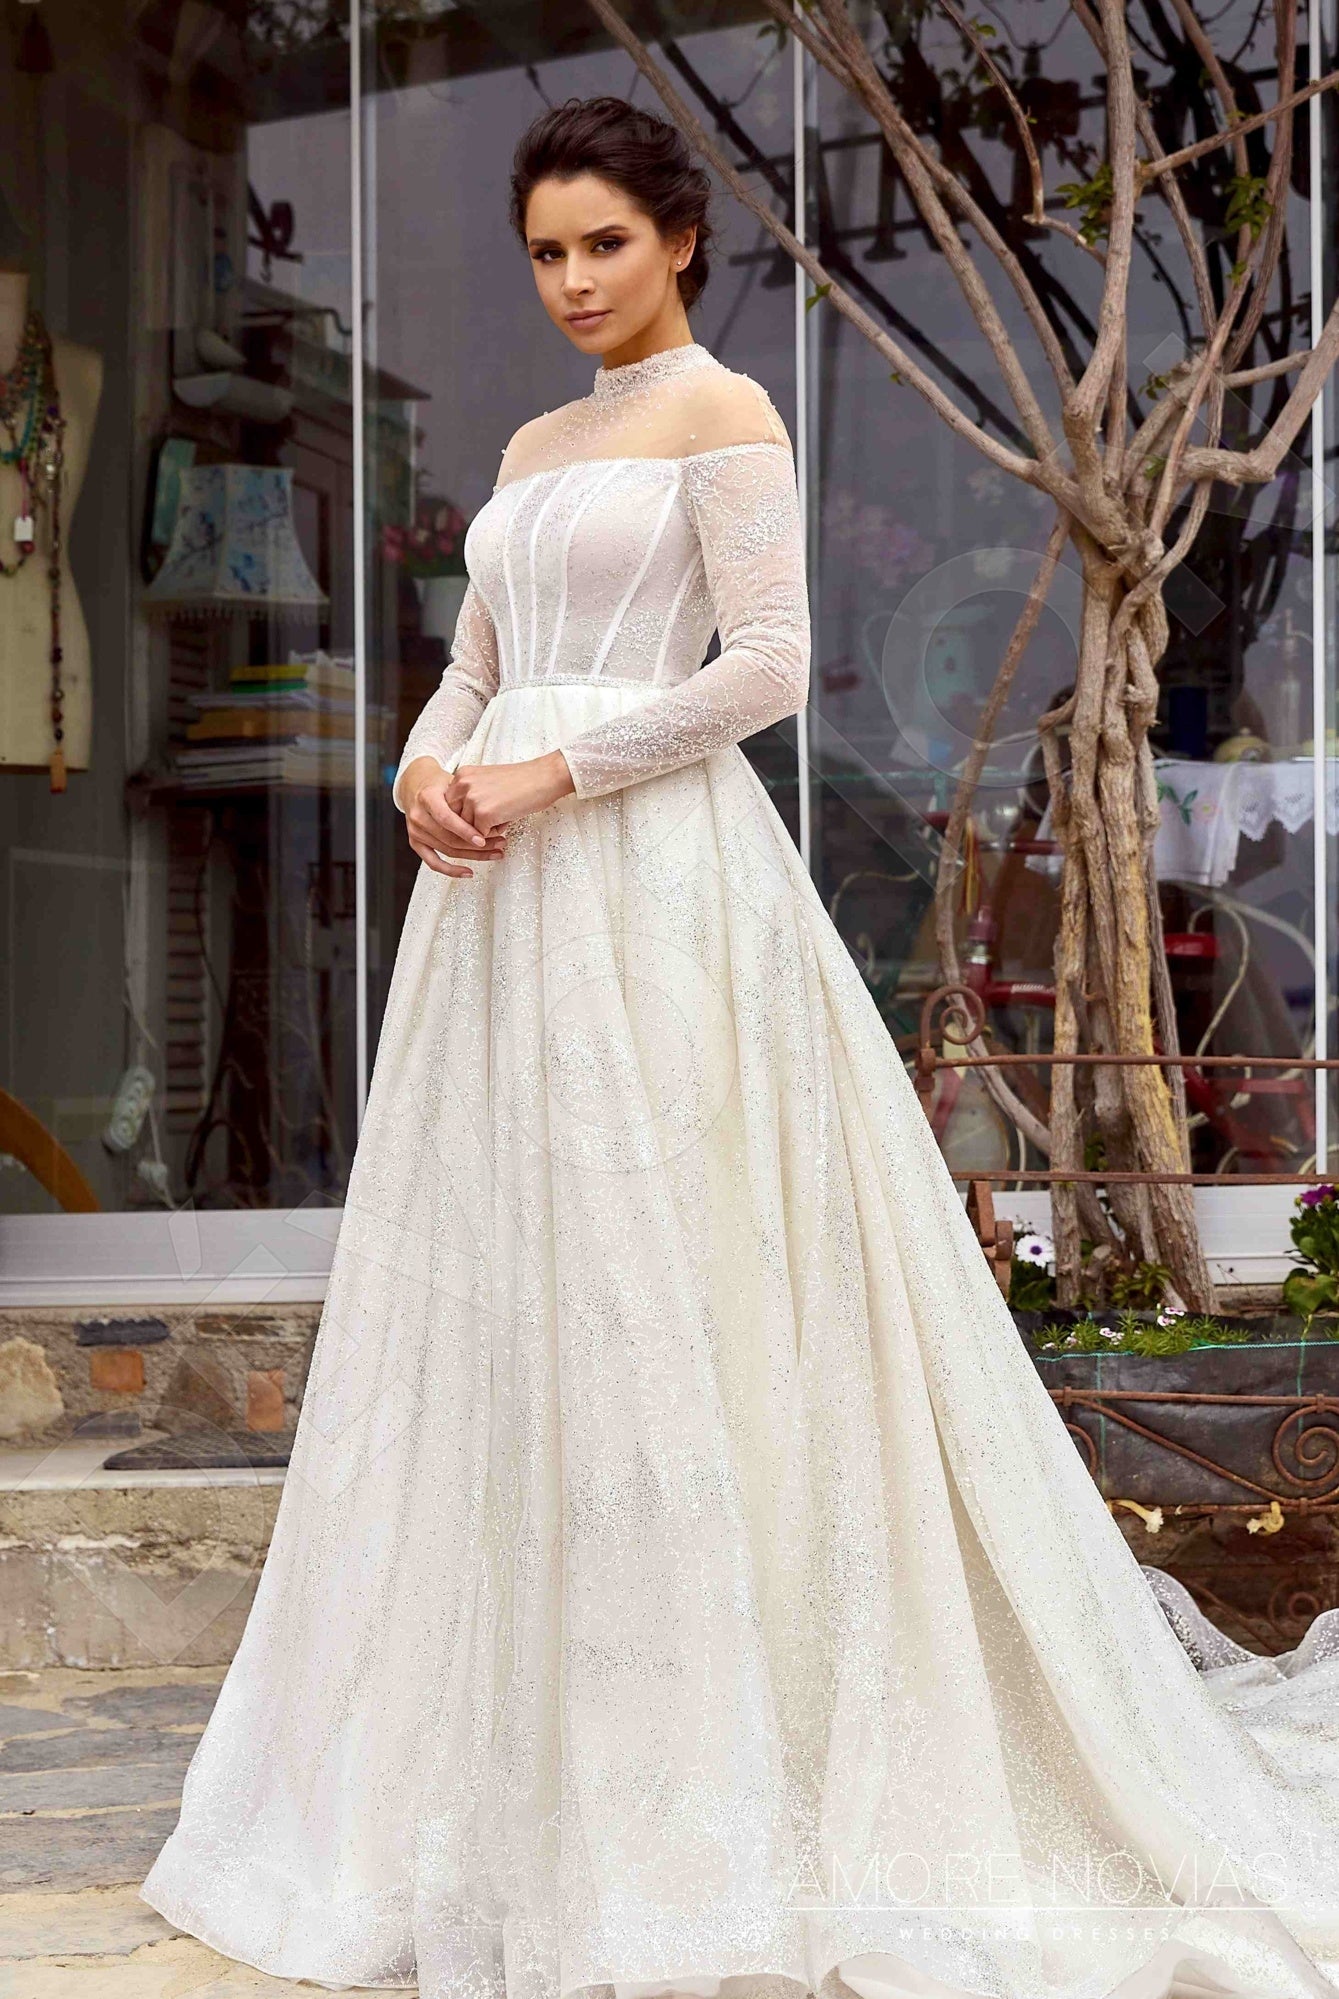 Lindsay Full back Princess/Ball Gown Long sleeve Wedding Dress 6